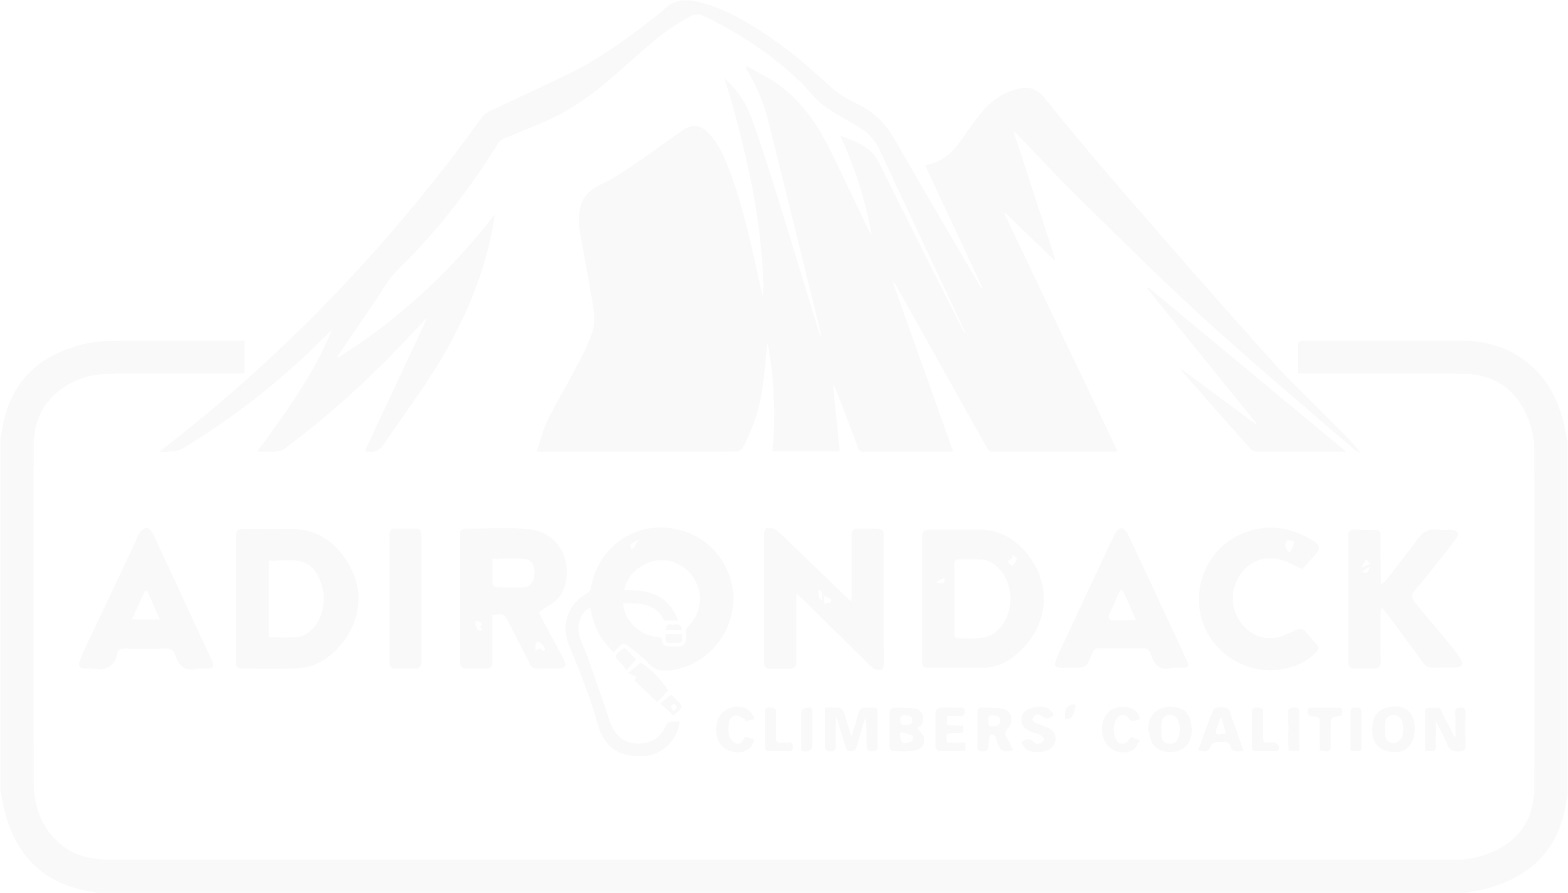 Adirondack Climbers' Coalition